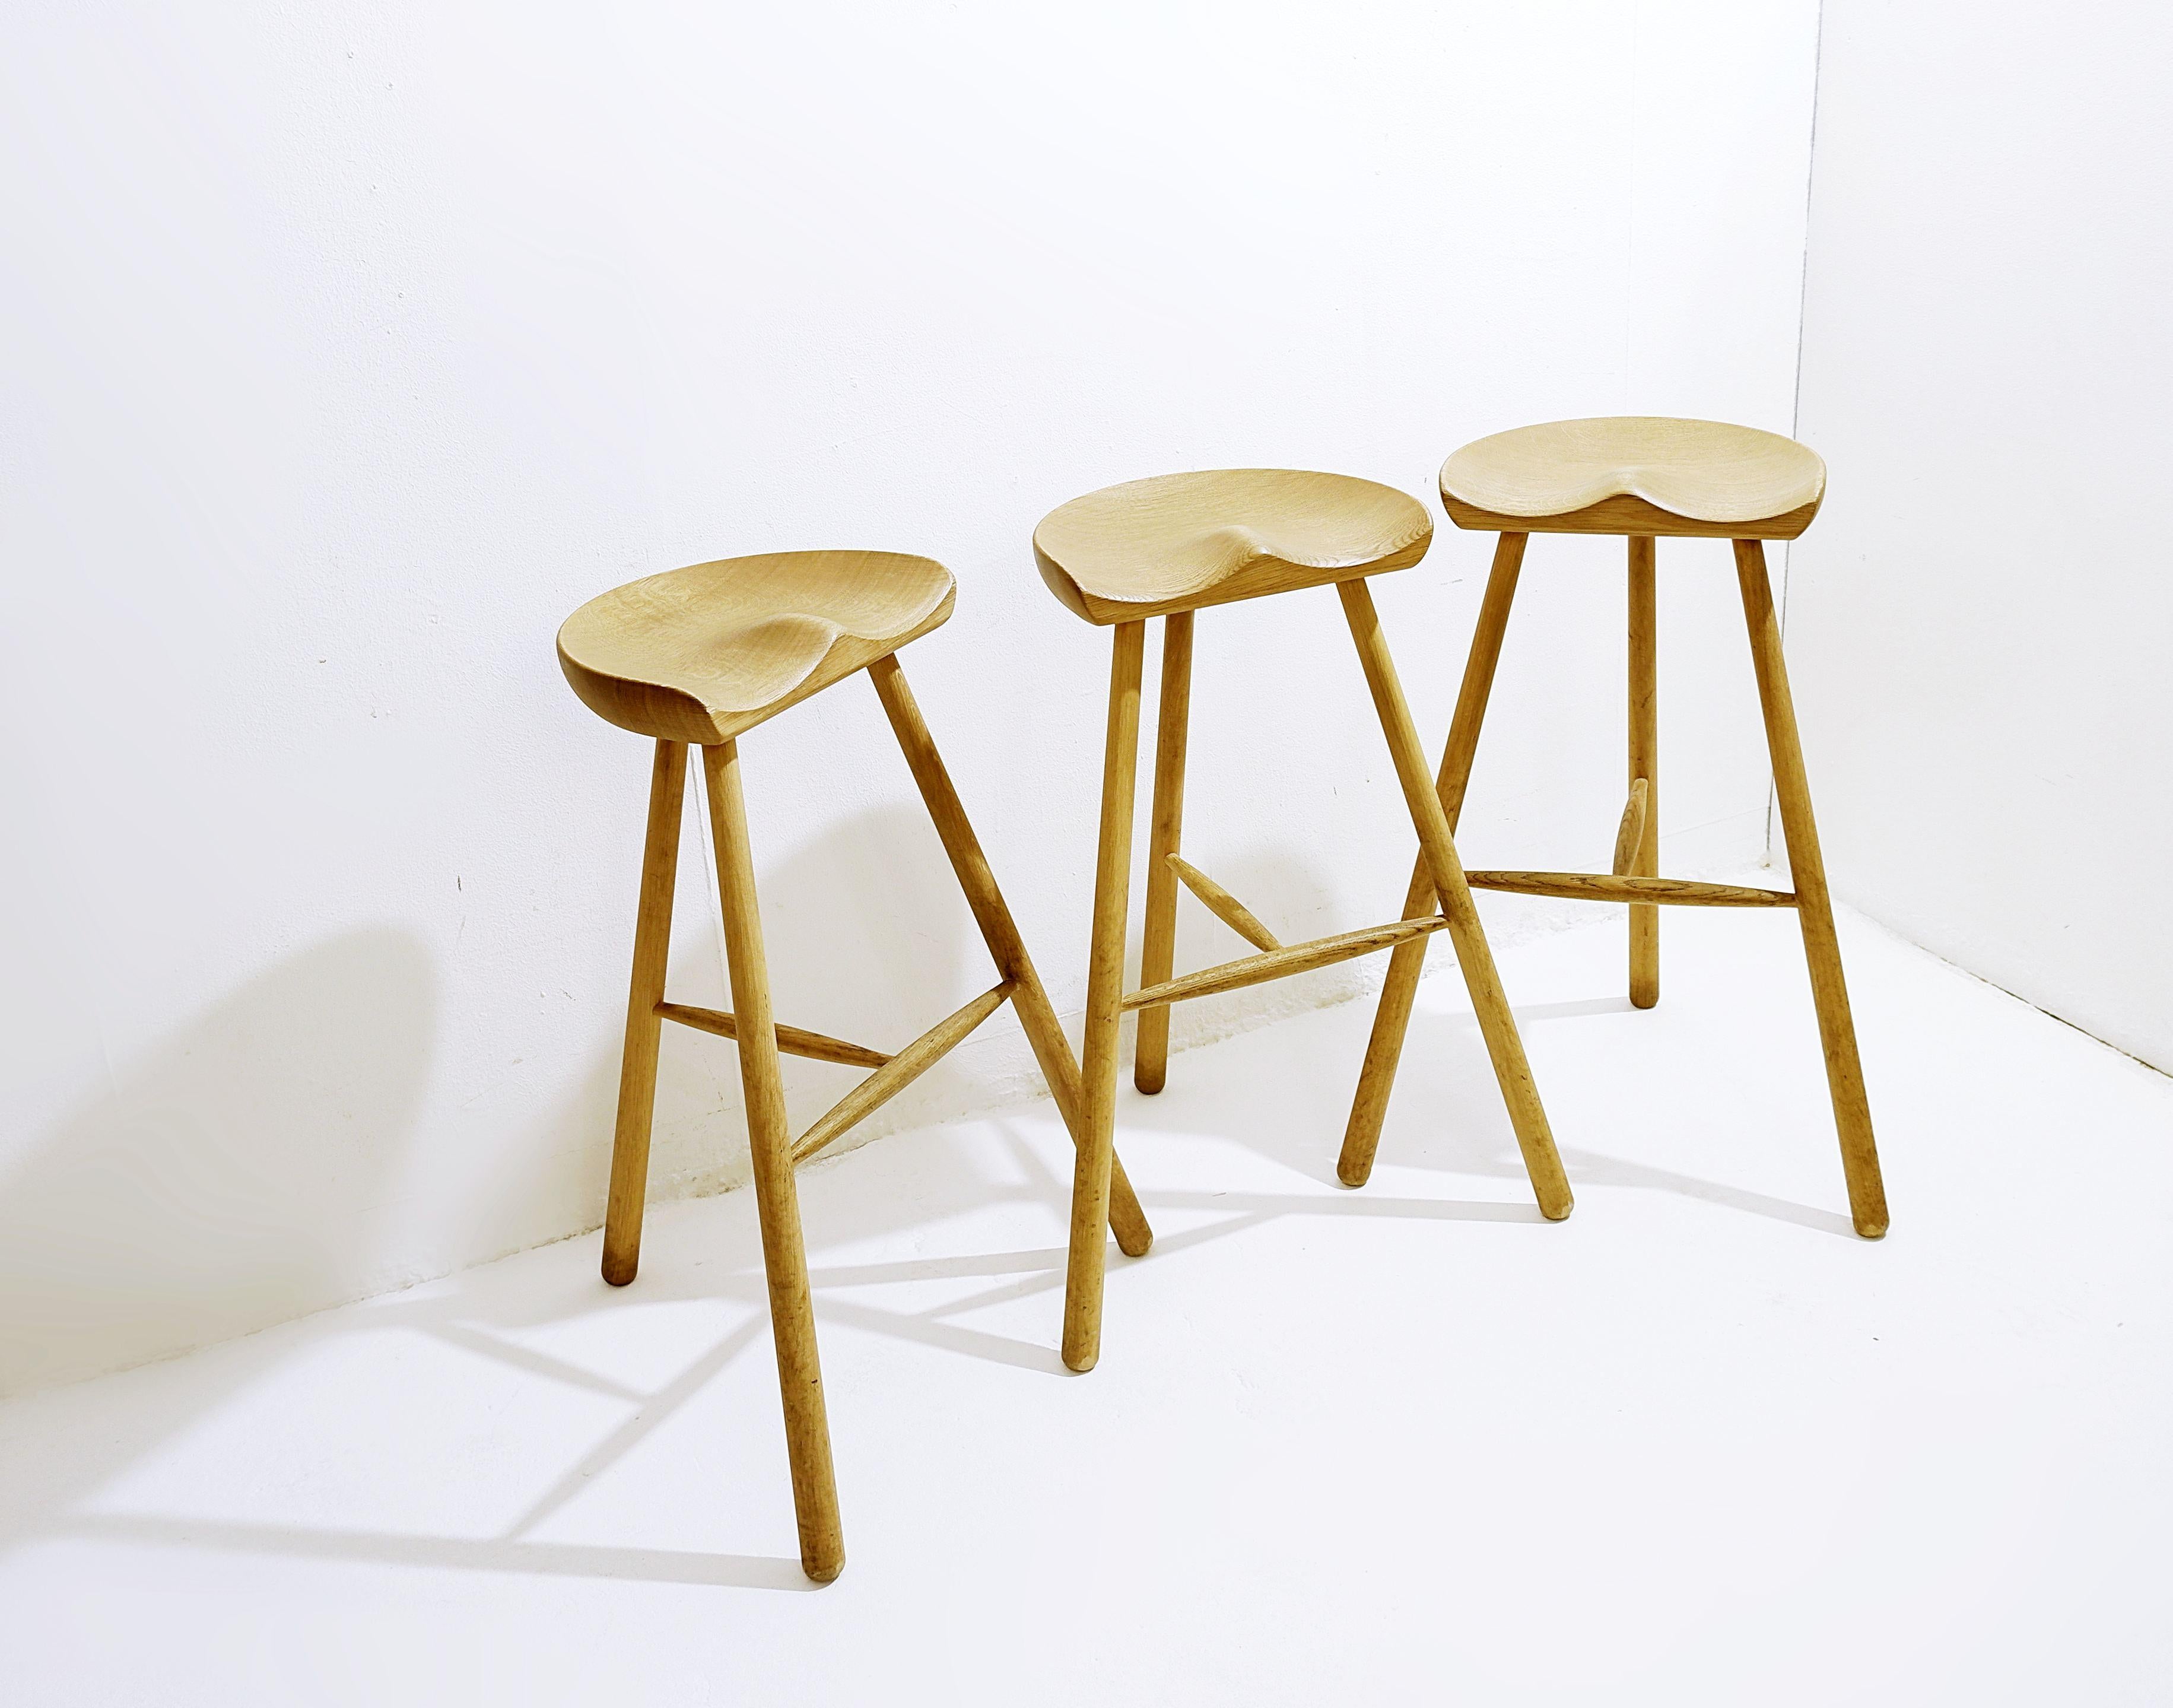 3 bar stools by Lars Werner, Form & Refine - Denmark, 2000s.